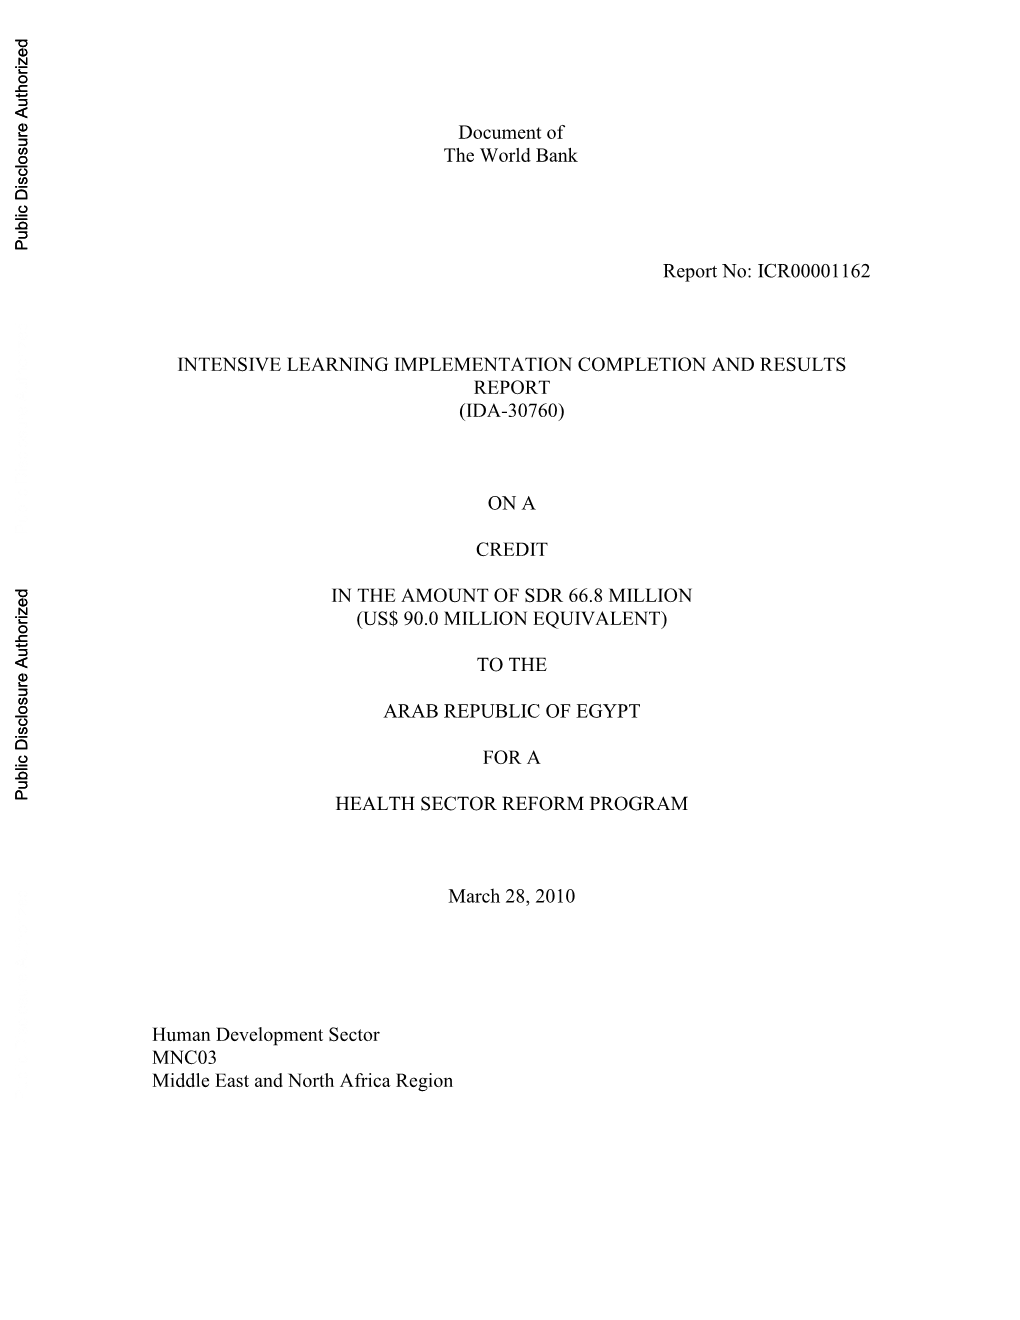 Health Sector Reform Program Implementation Completion Report MOH Version